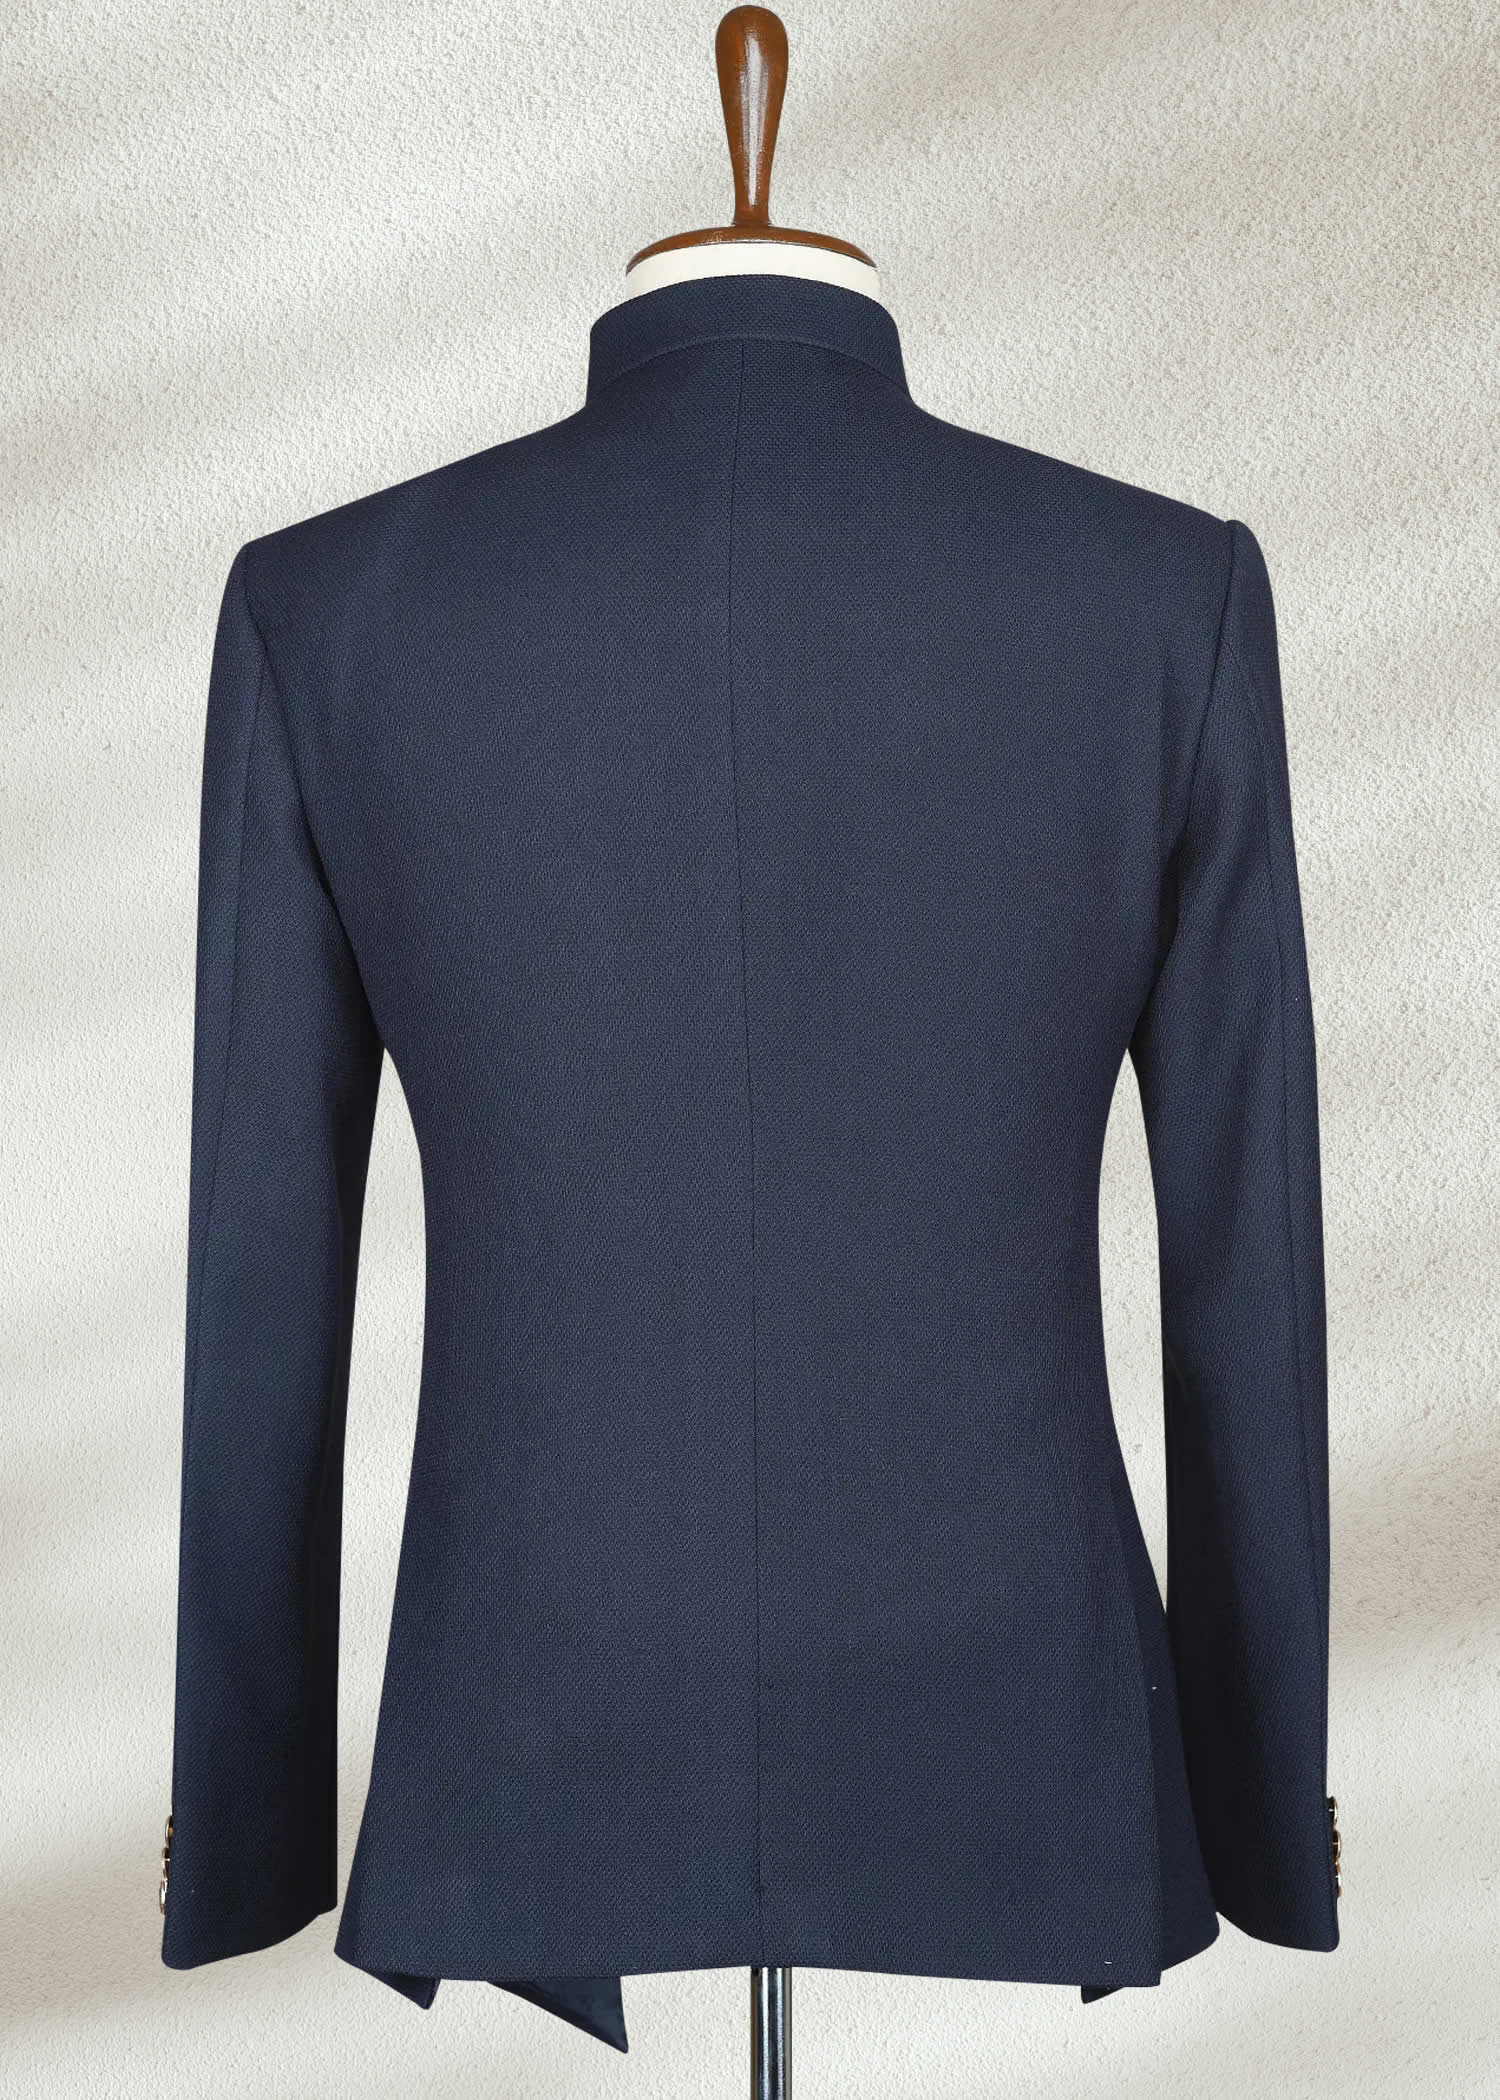 Buy Navy Blue Embroidered Jodhpuri Prince Suit